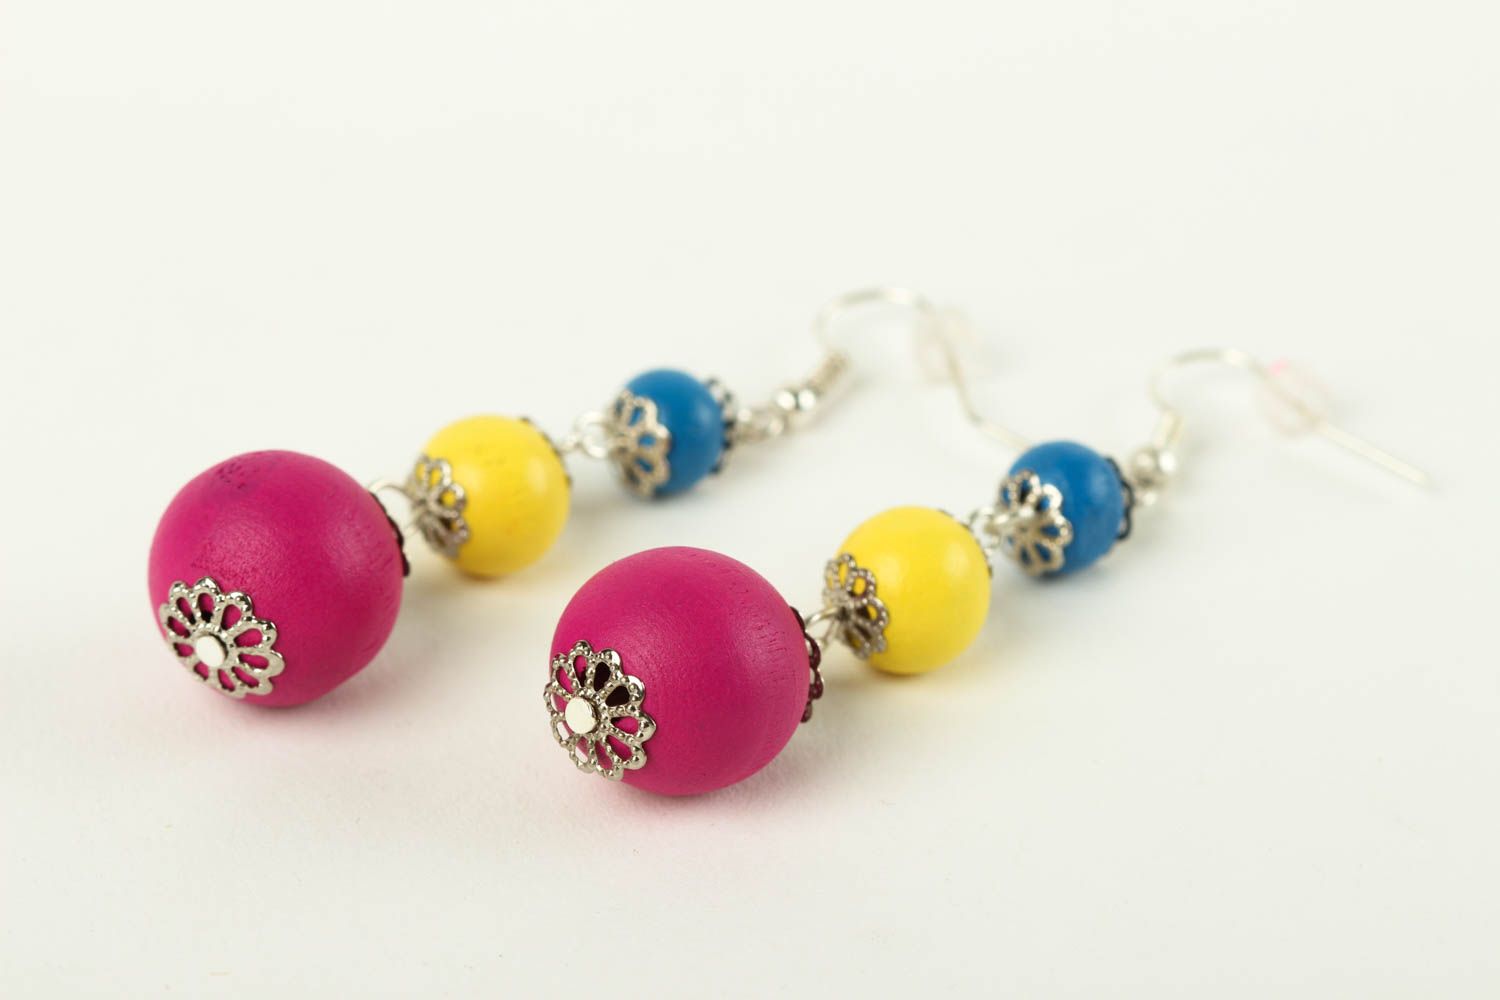 Handmade wooden earrings colorful earrings wooden accessories fashion jewlery photo 3